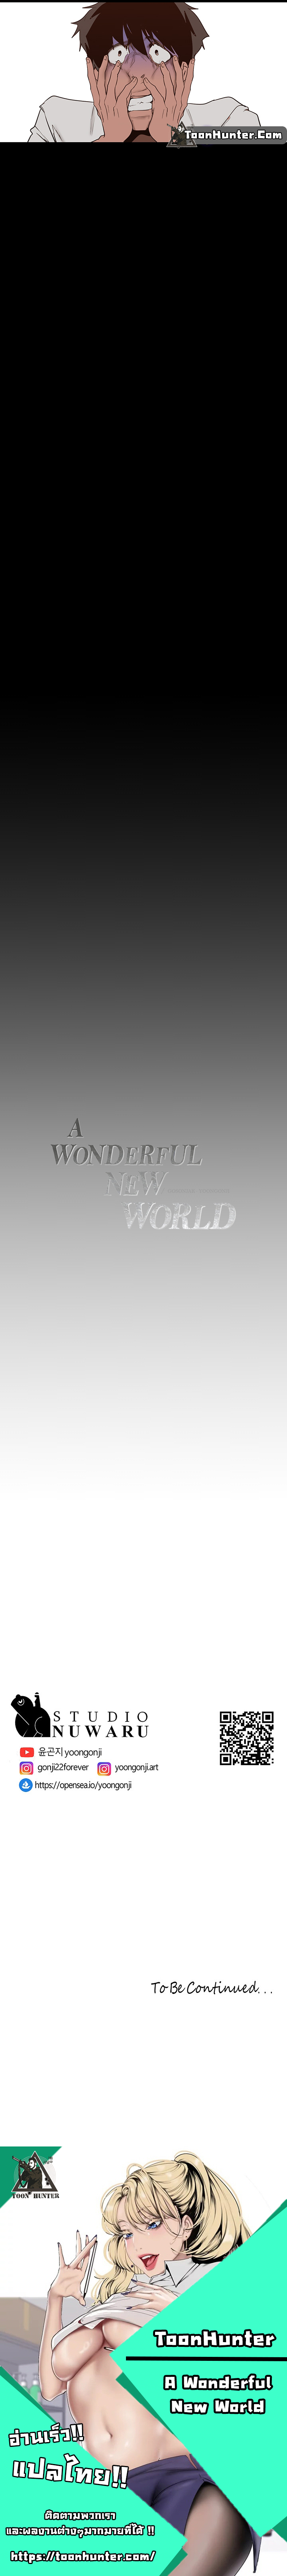 A Wonderful New World12